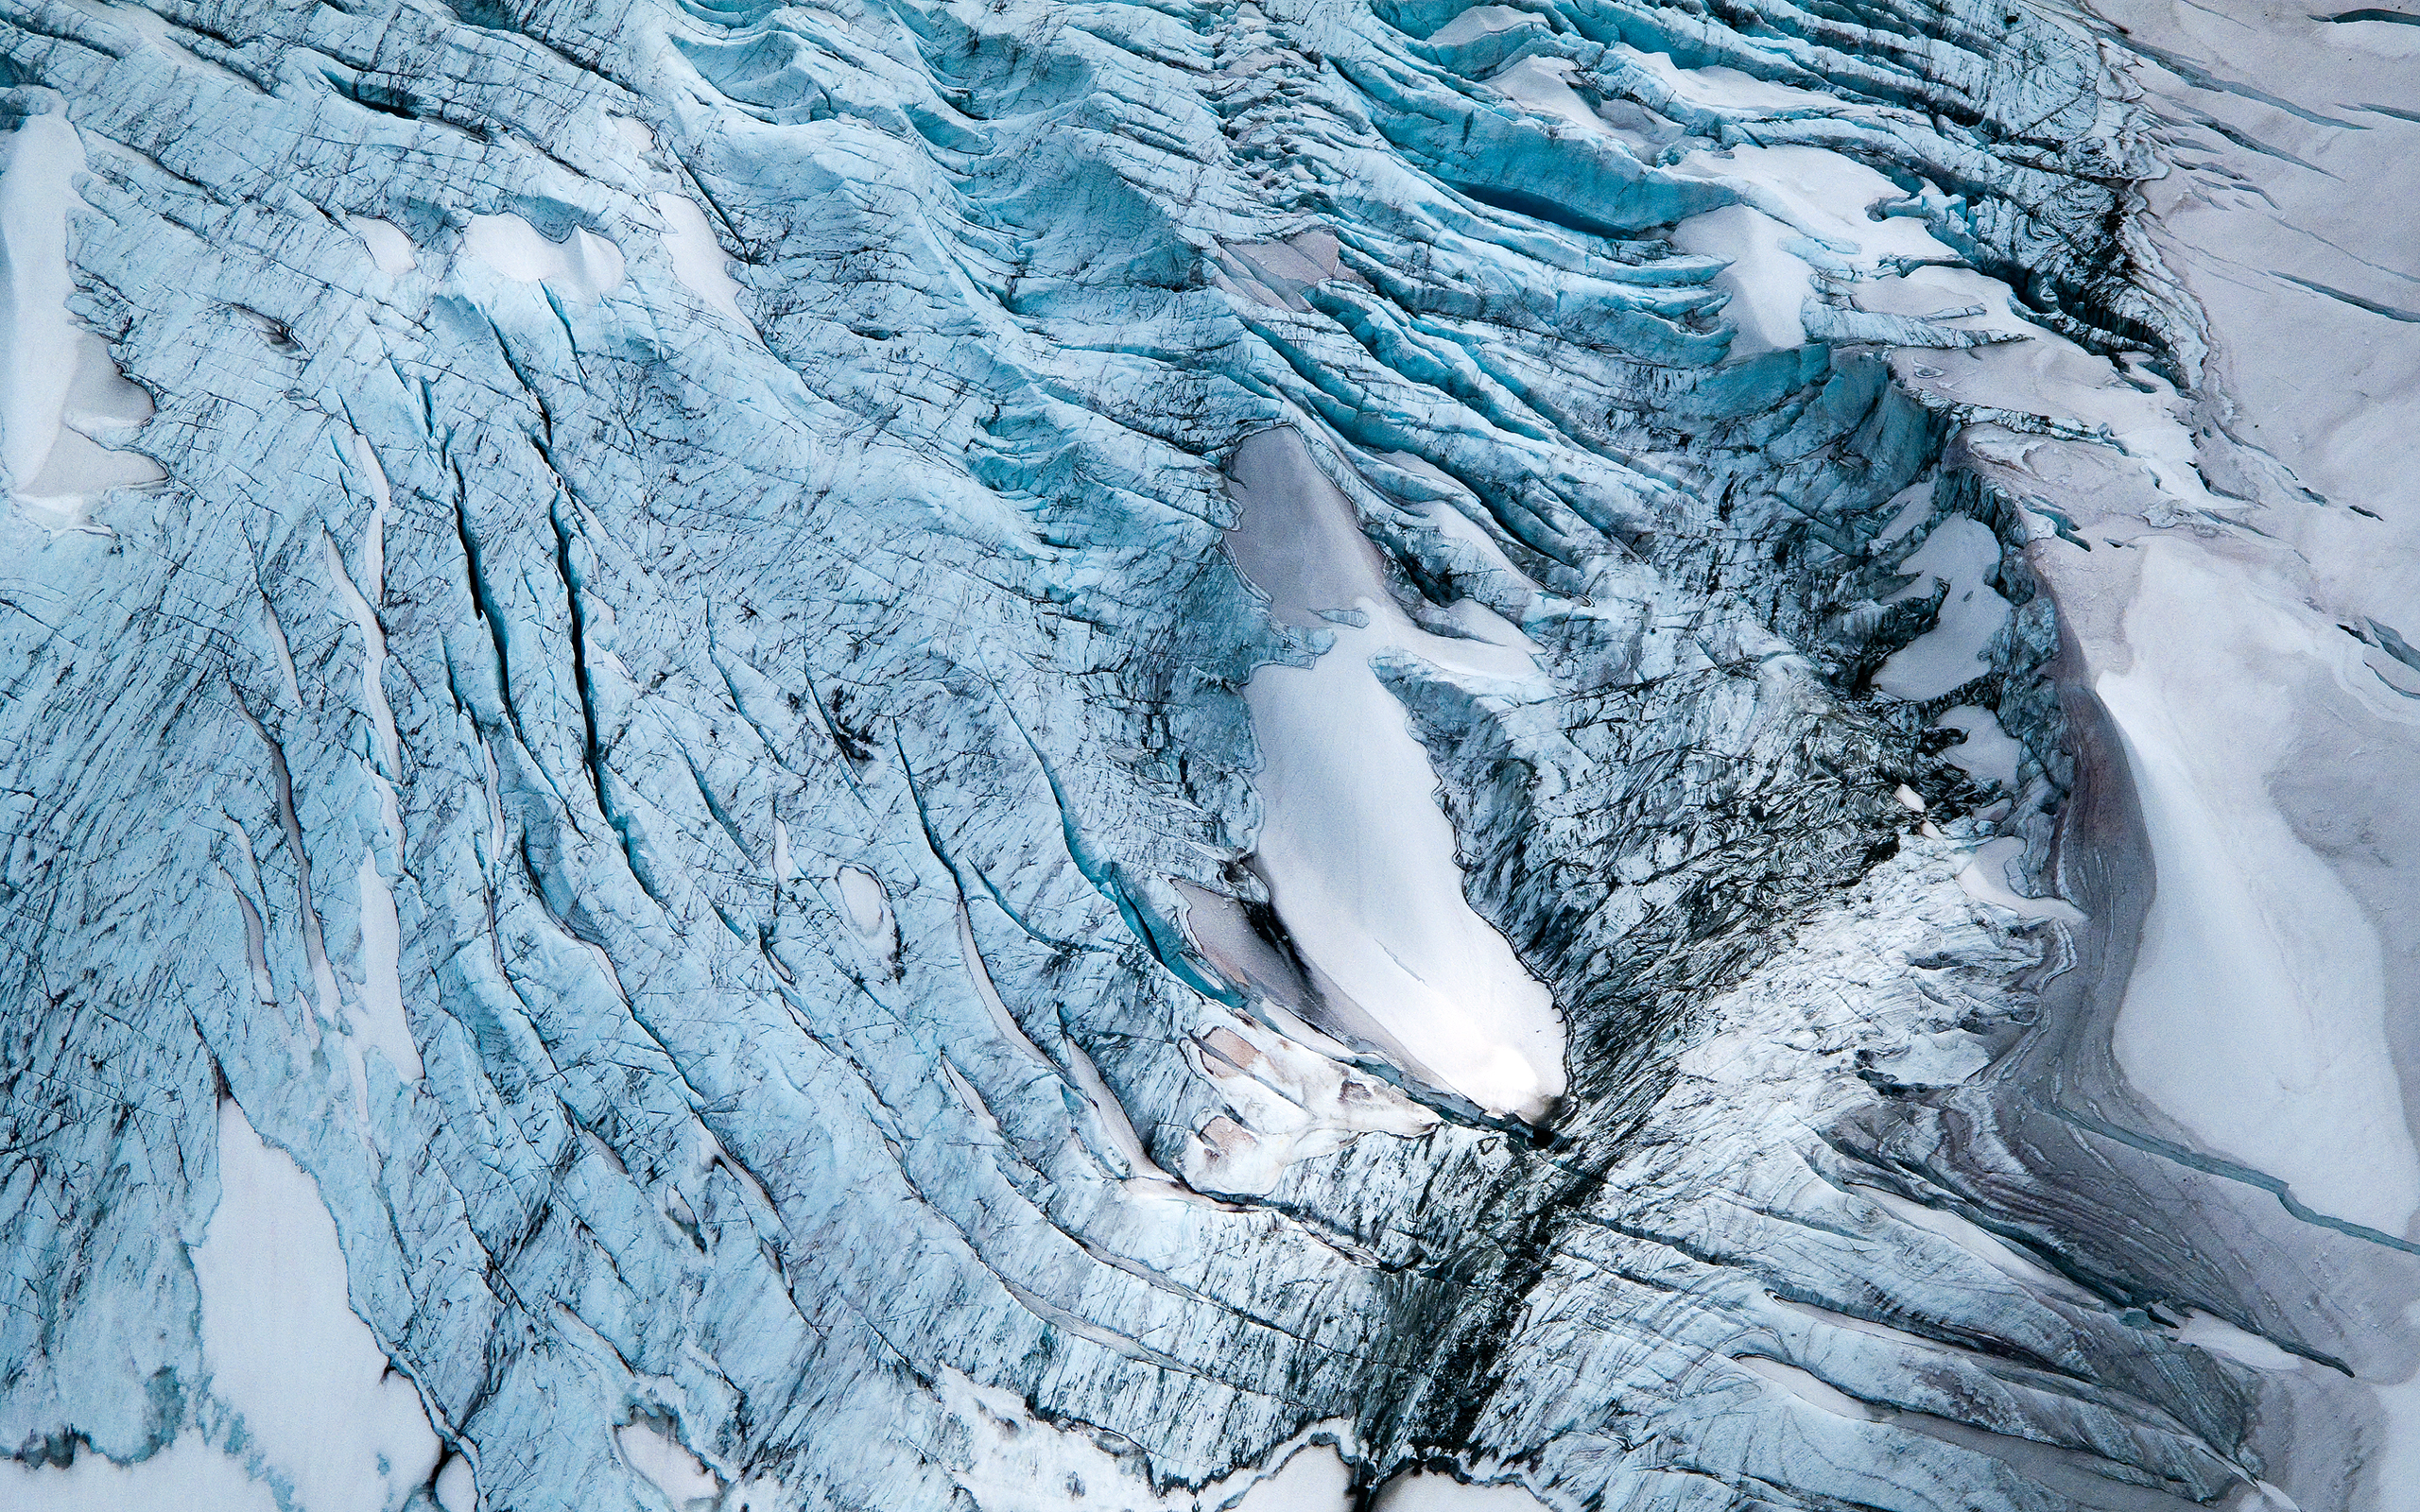 Blue Glacier - A stunning nature scene of a glacier showcasing its majestic beauty.